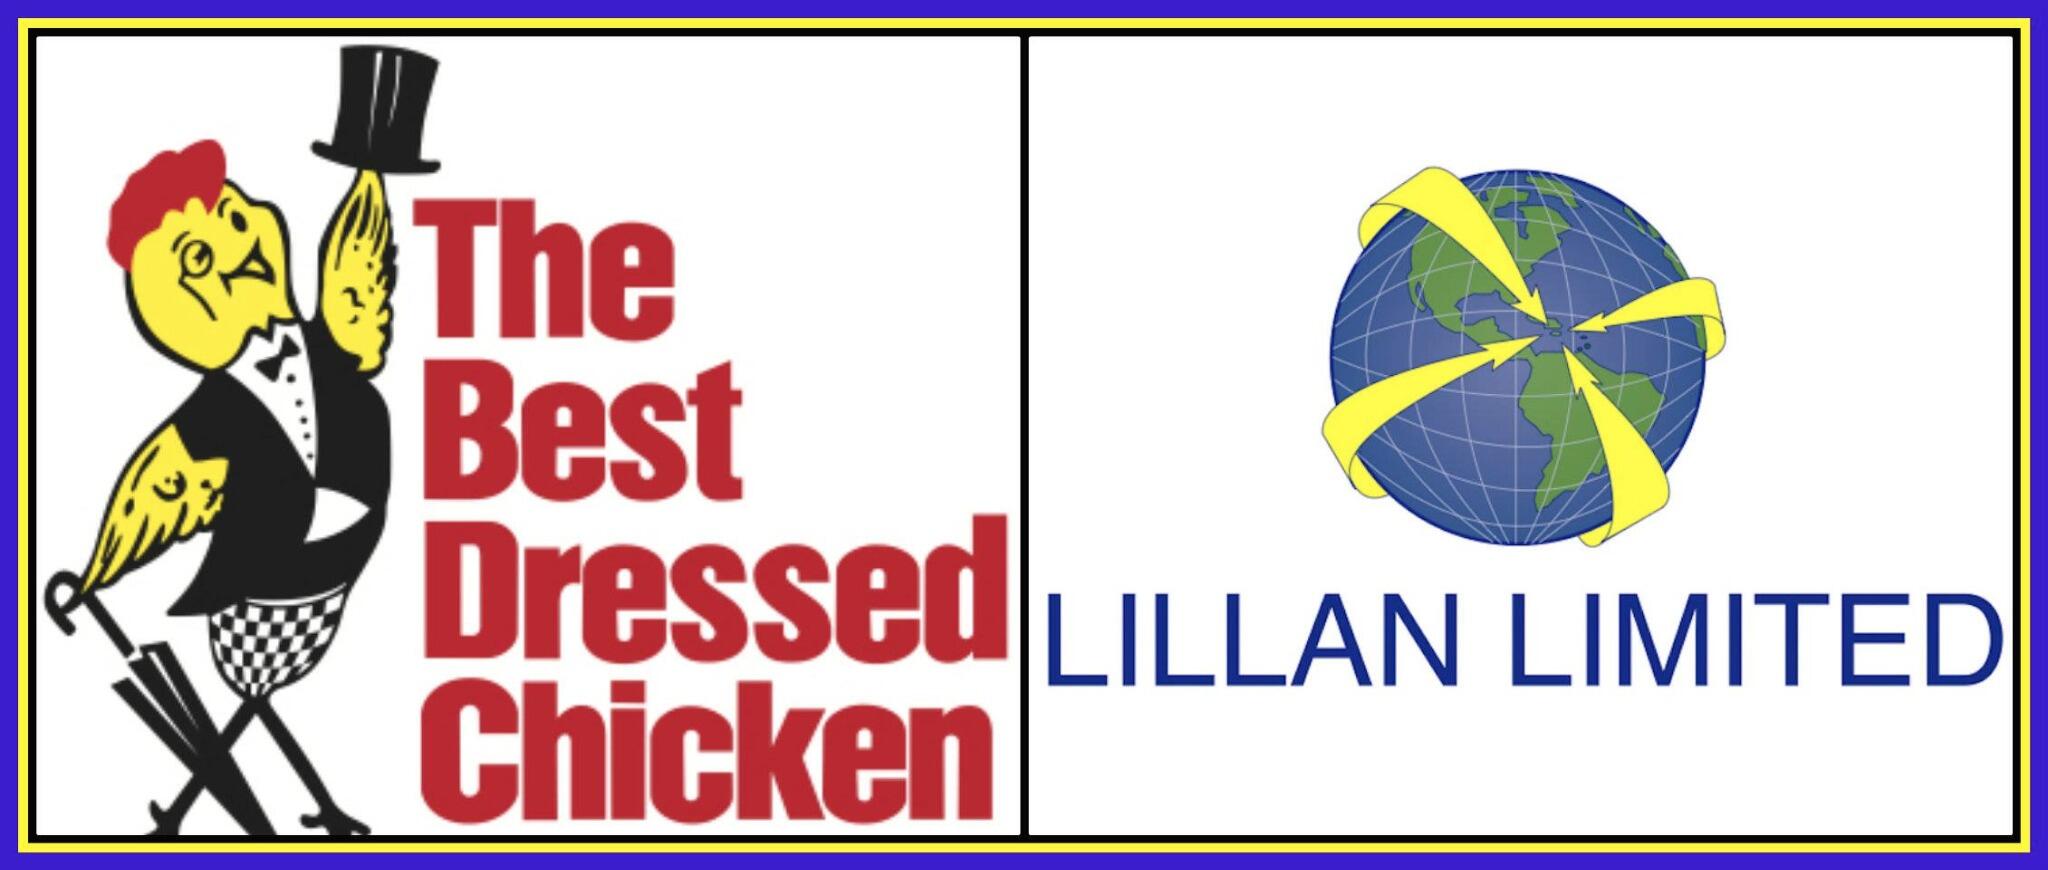 Lillanltd On Twitter Lillan Partners With Best Dressed Chicken